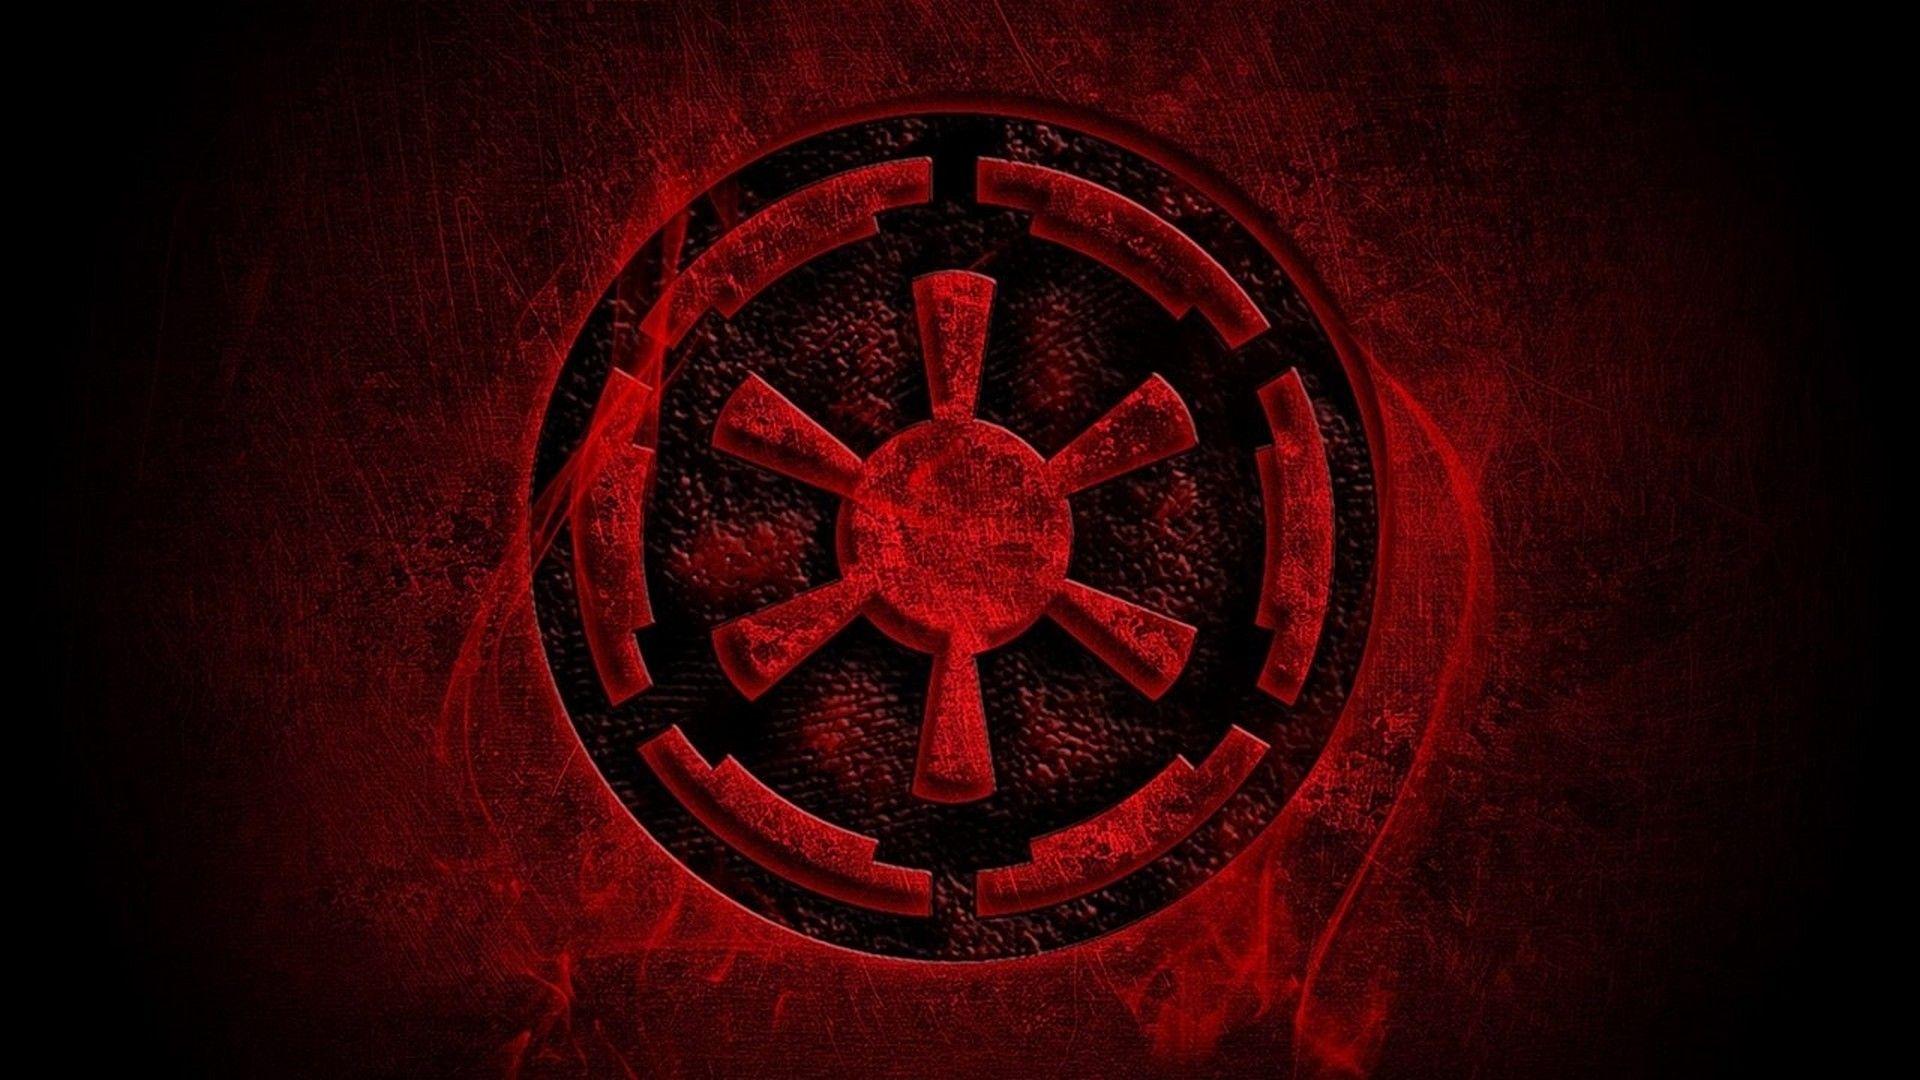 Star Wars Galactic Empire Logo Wallpaper Live Wallpaper HD. Empire logo, Star wars image, Star wars background